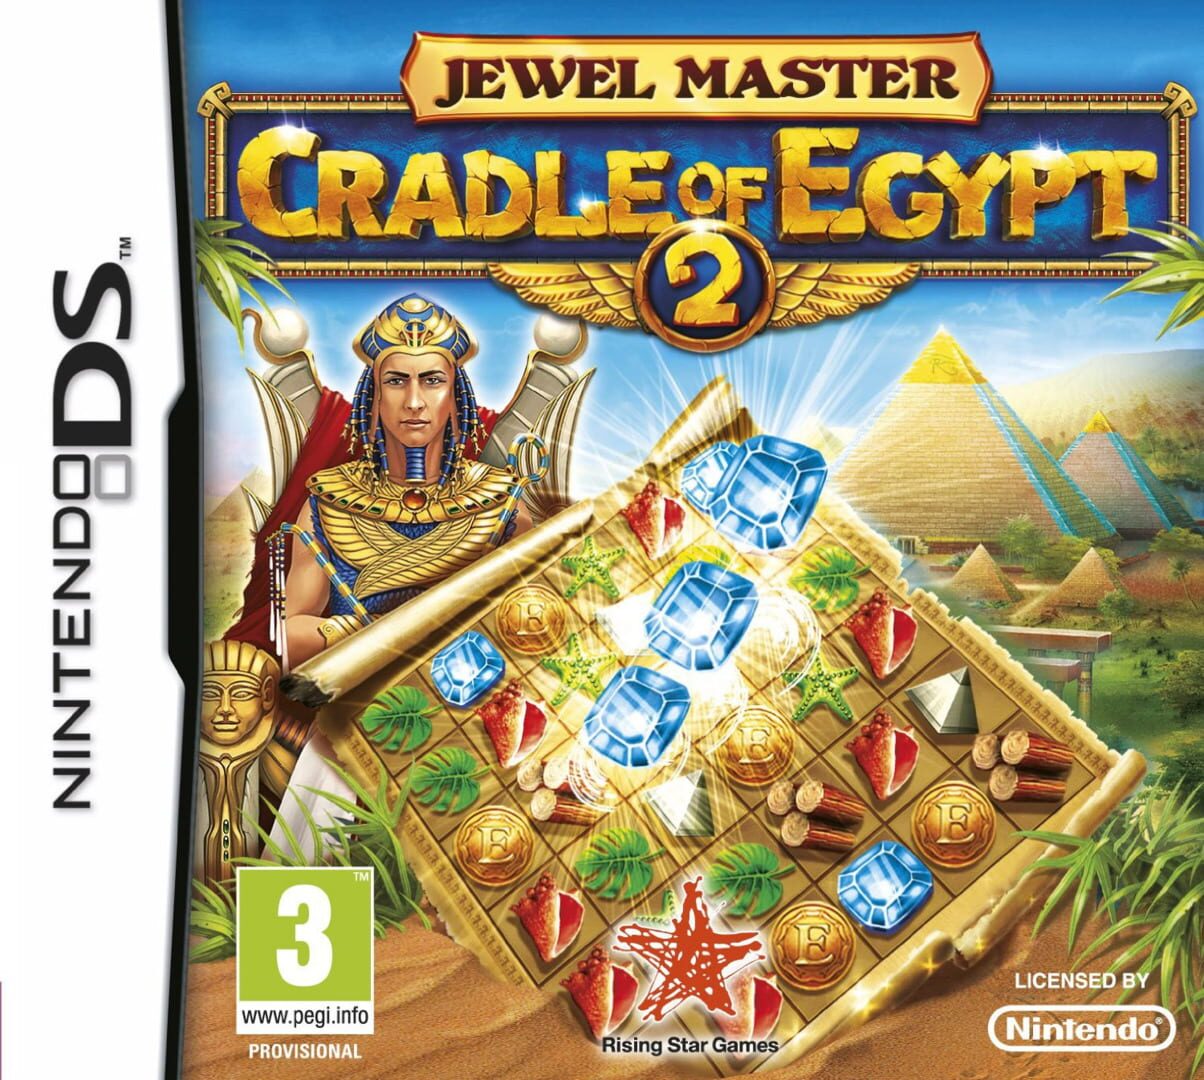 Master everyone. Jewel Master Cradle of Egypt. NDS игры. Civilization Nintendo DS. Египет 2 игра.